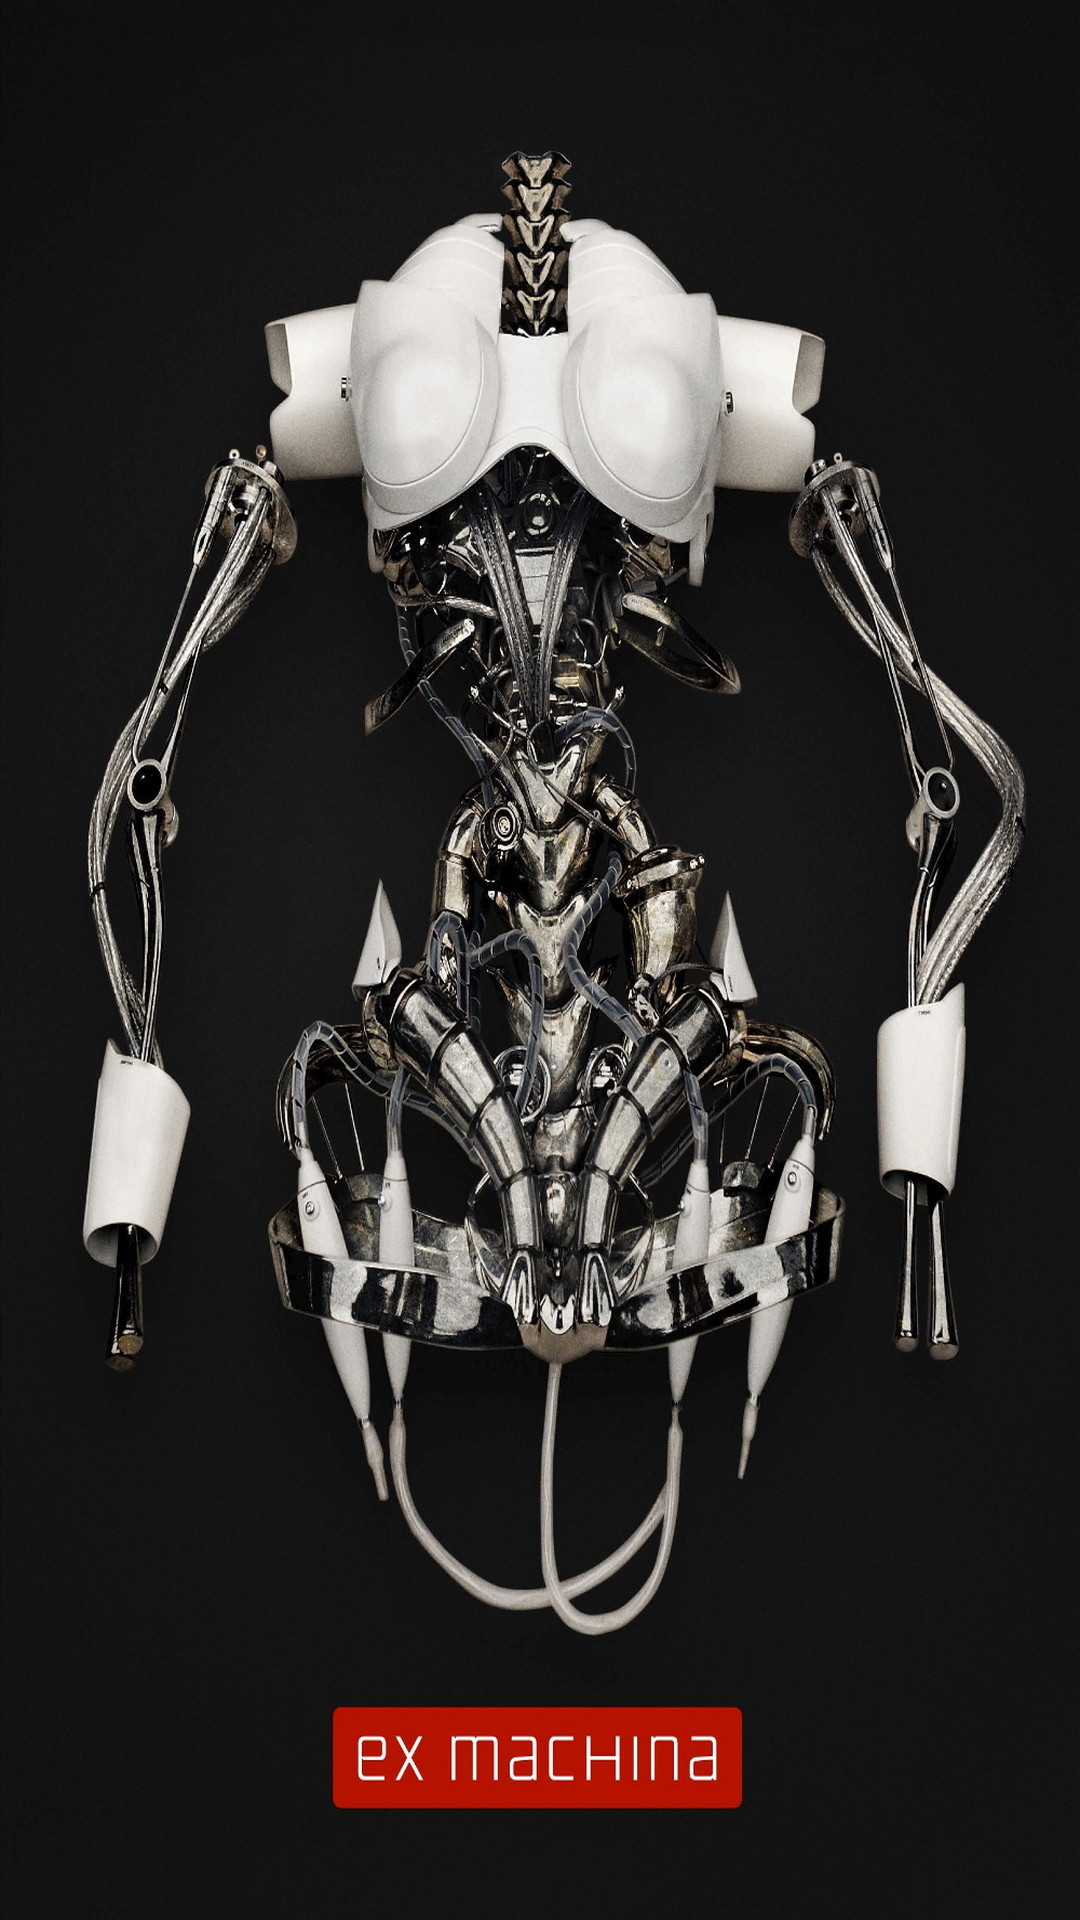 1080x1920 Ex Machina Movie Poster Robot Skeleton iPhone 6 Plus HD Wallpaper - http://